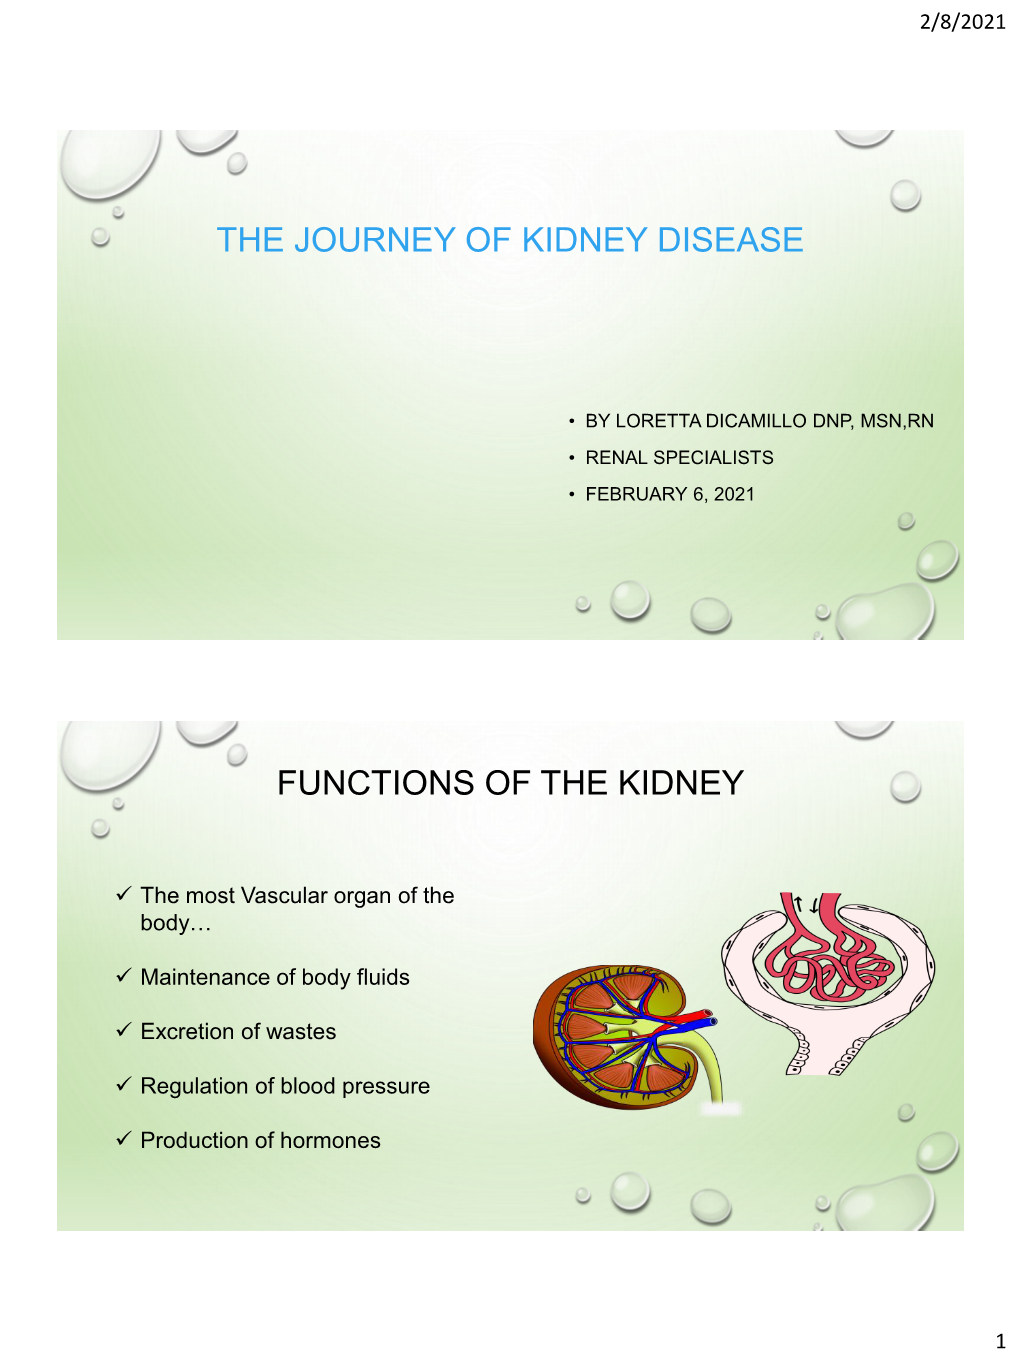 The Journey of Kidney Disease